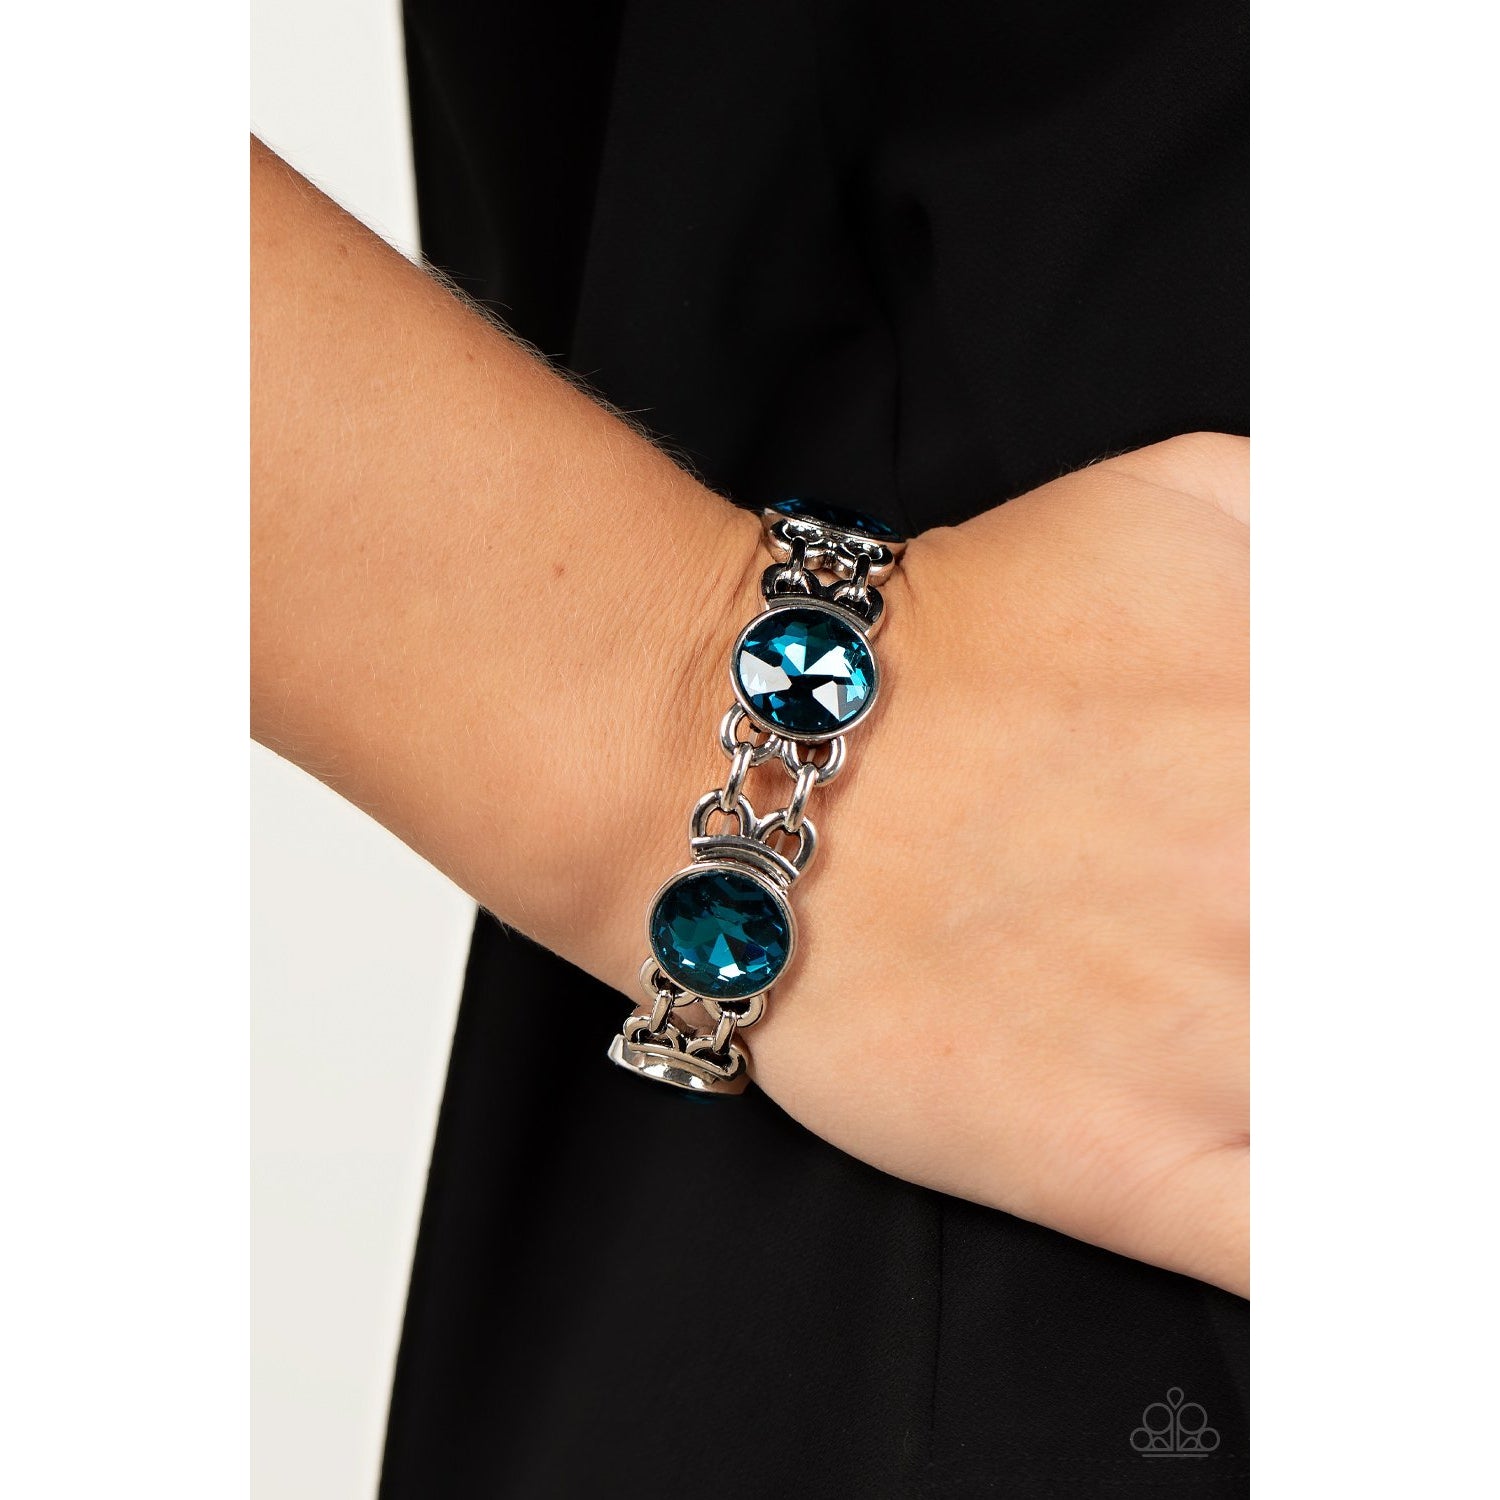 Devoted to Drama - Blue Rhinestone Bracelet - Paparazzi Accessories - GlaMarous Titi Jewels